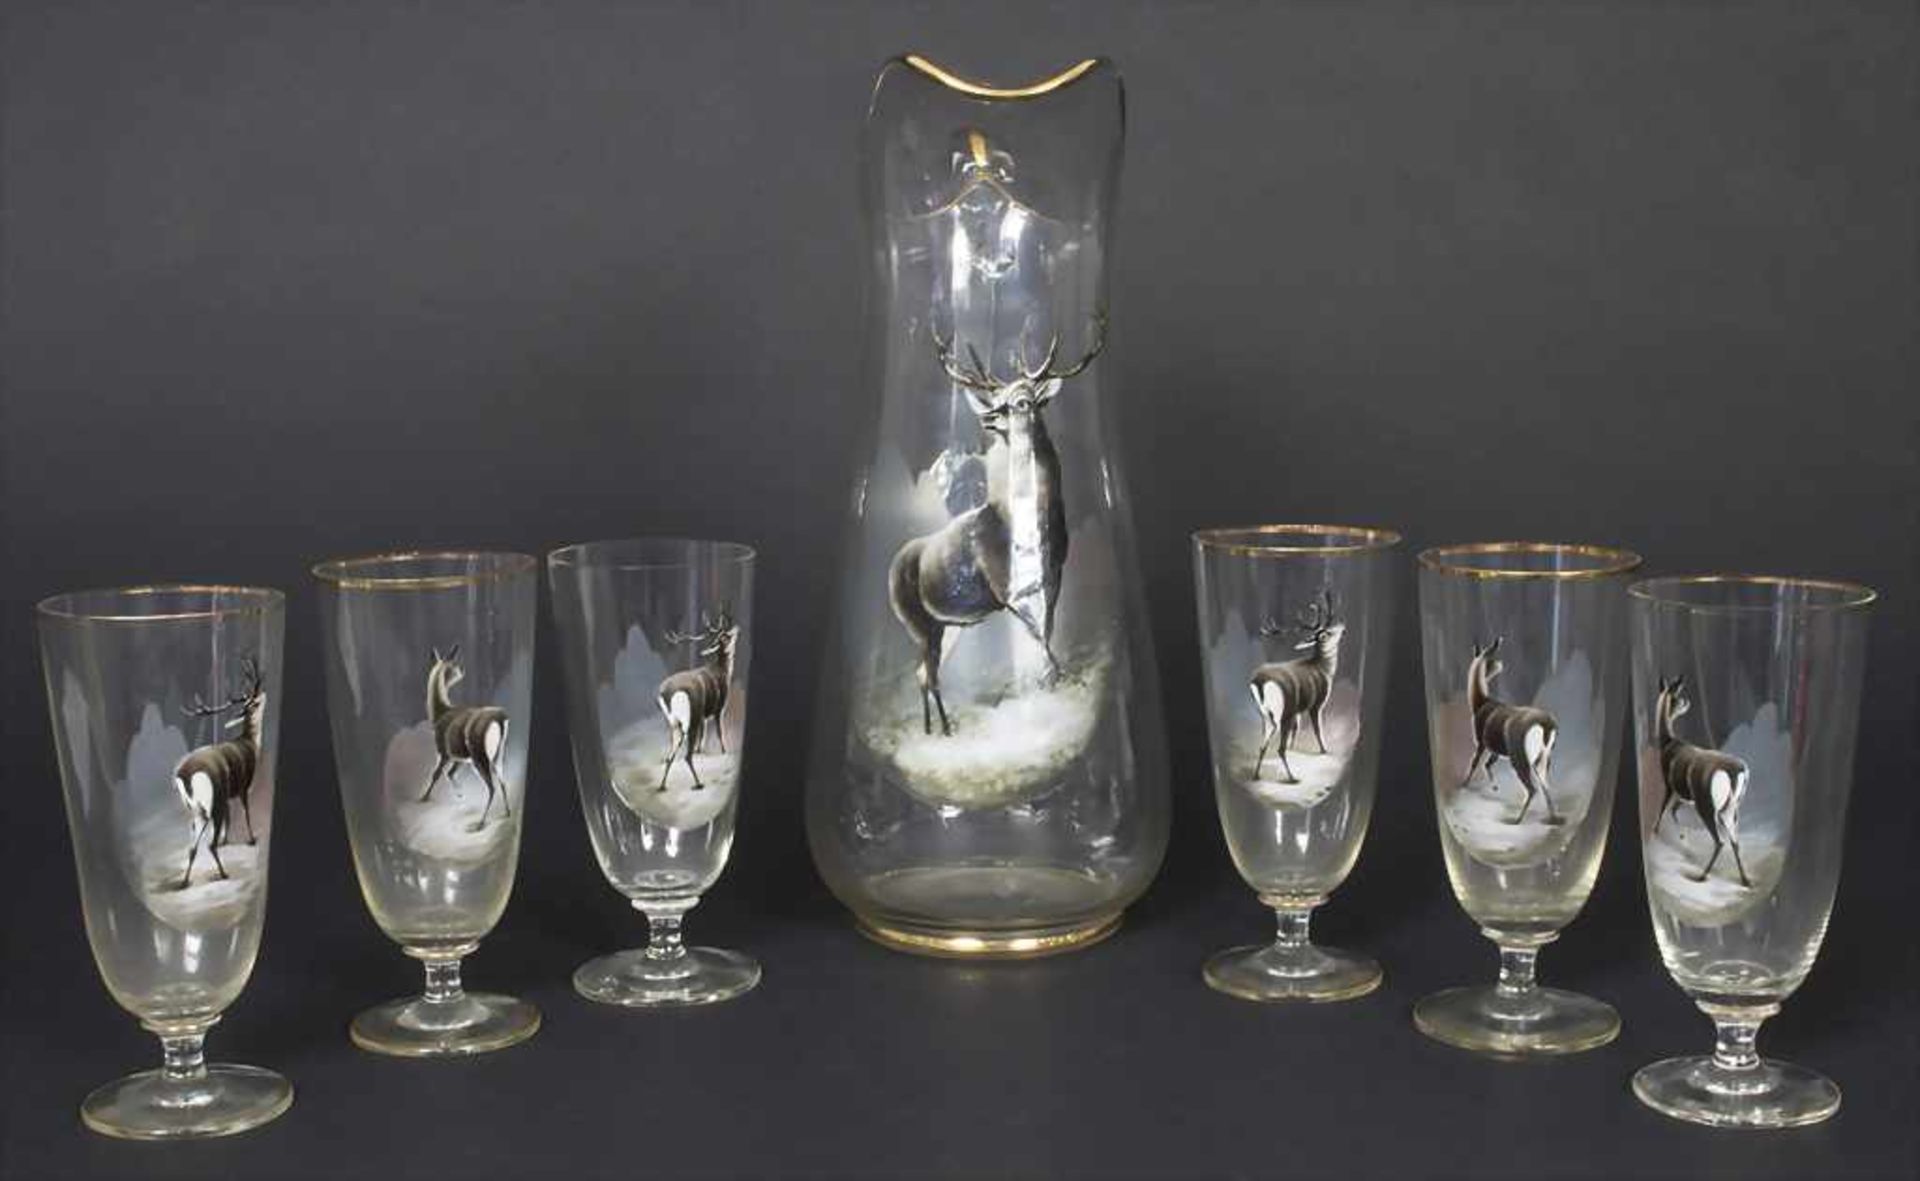 Saftkrug und 6 Gläser mit Hirschmotiven / A decanter and 6 glasses with deer decor, um 1900